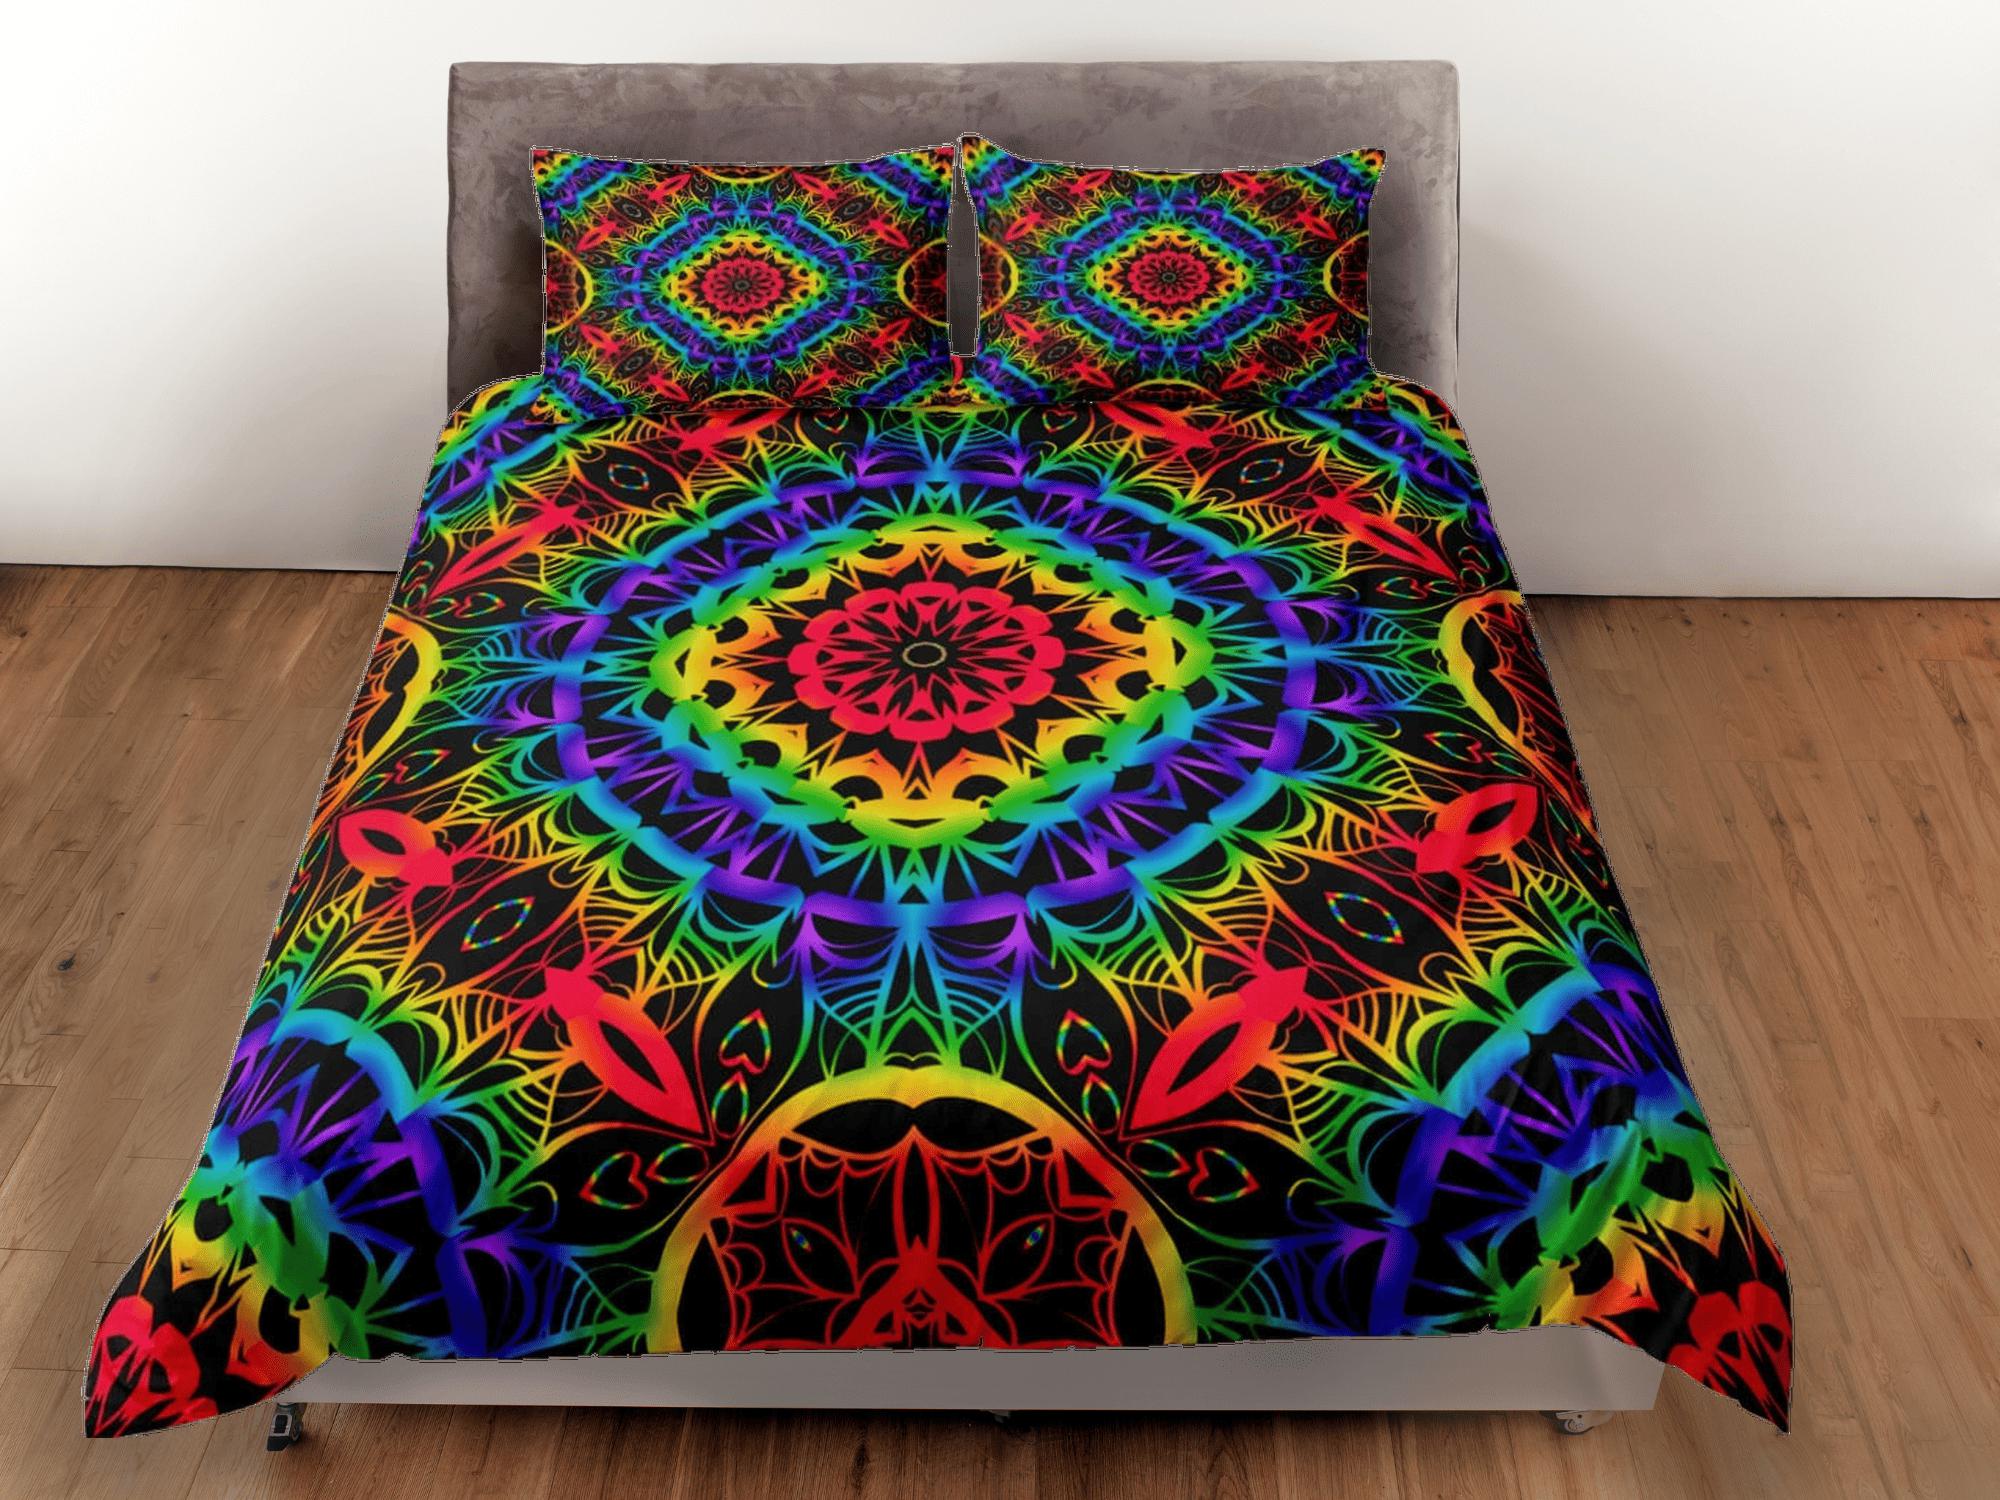 daintyduvet Rainbow psychedelic duvet cover hippie bedding set full, queen, king, preppy dorm bedding, indie room decor, aesthetic bedspread y2k